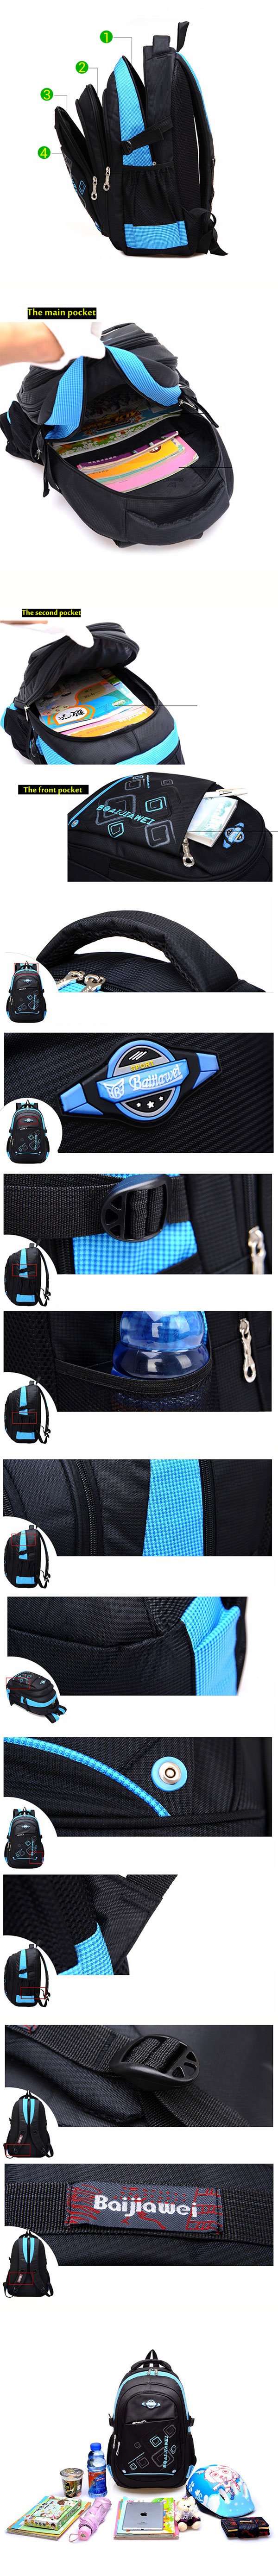 Waterproof-Children-School-Bag-Girls-Boys-Travel-Backpack-Shoulder-Bag-998515